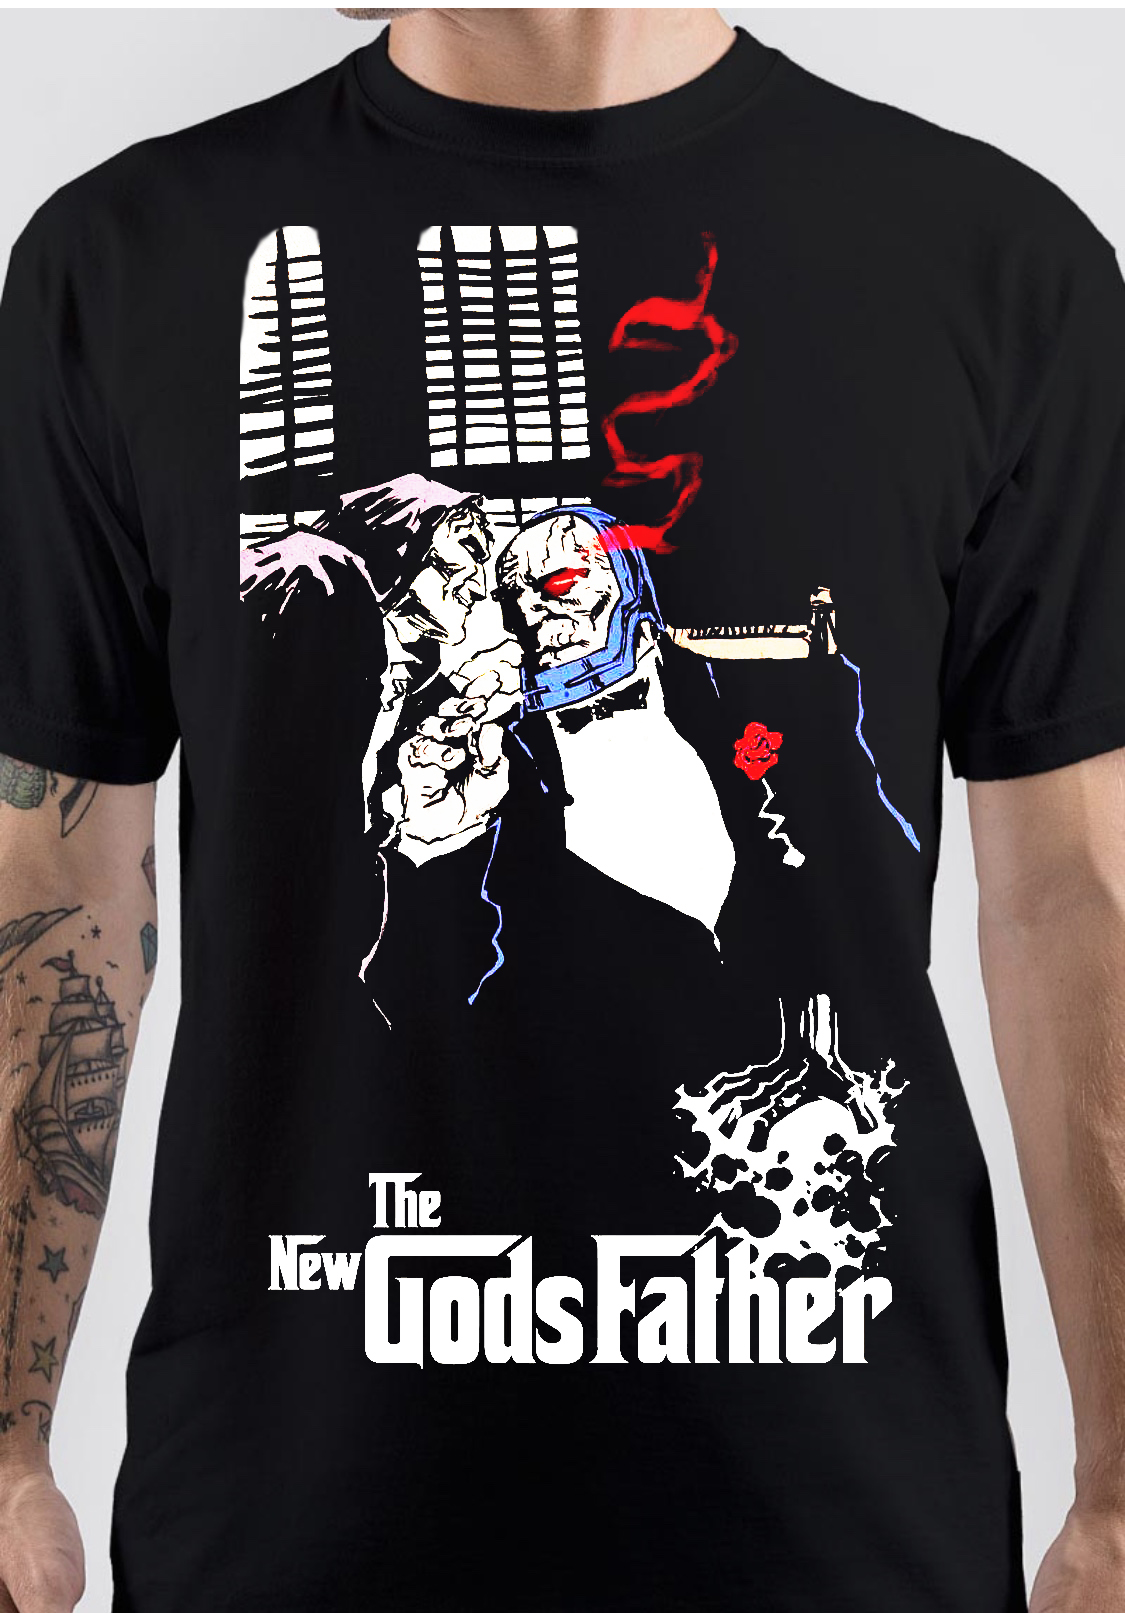 godfather t shirt india